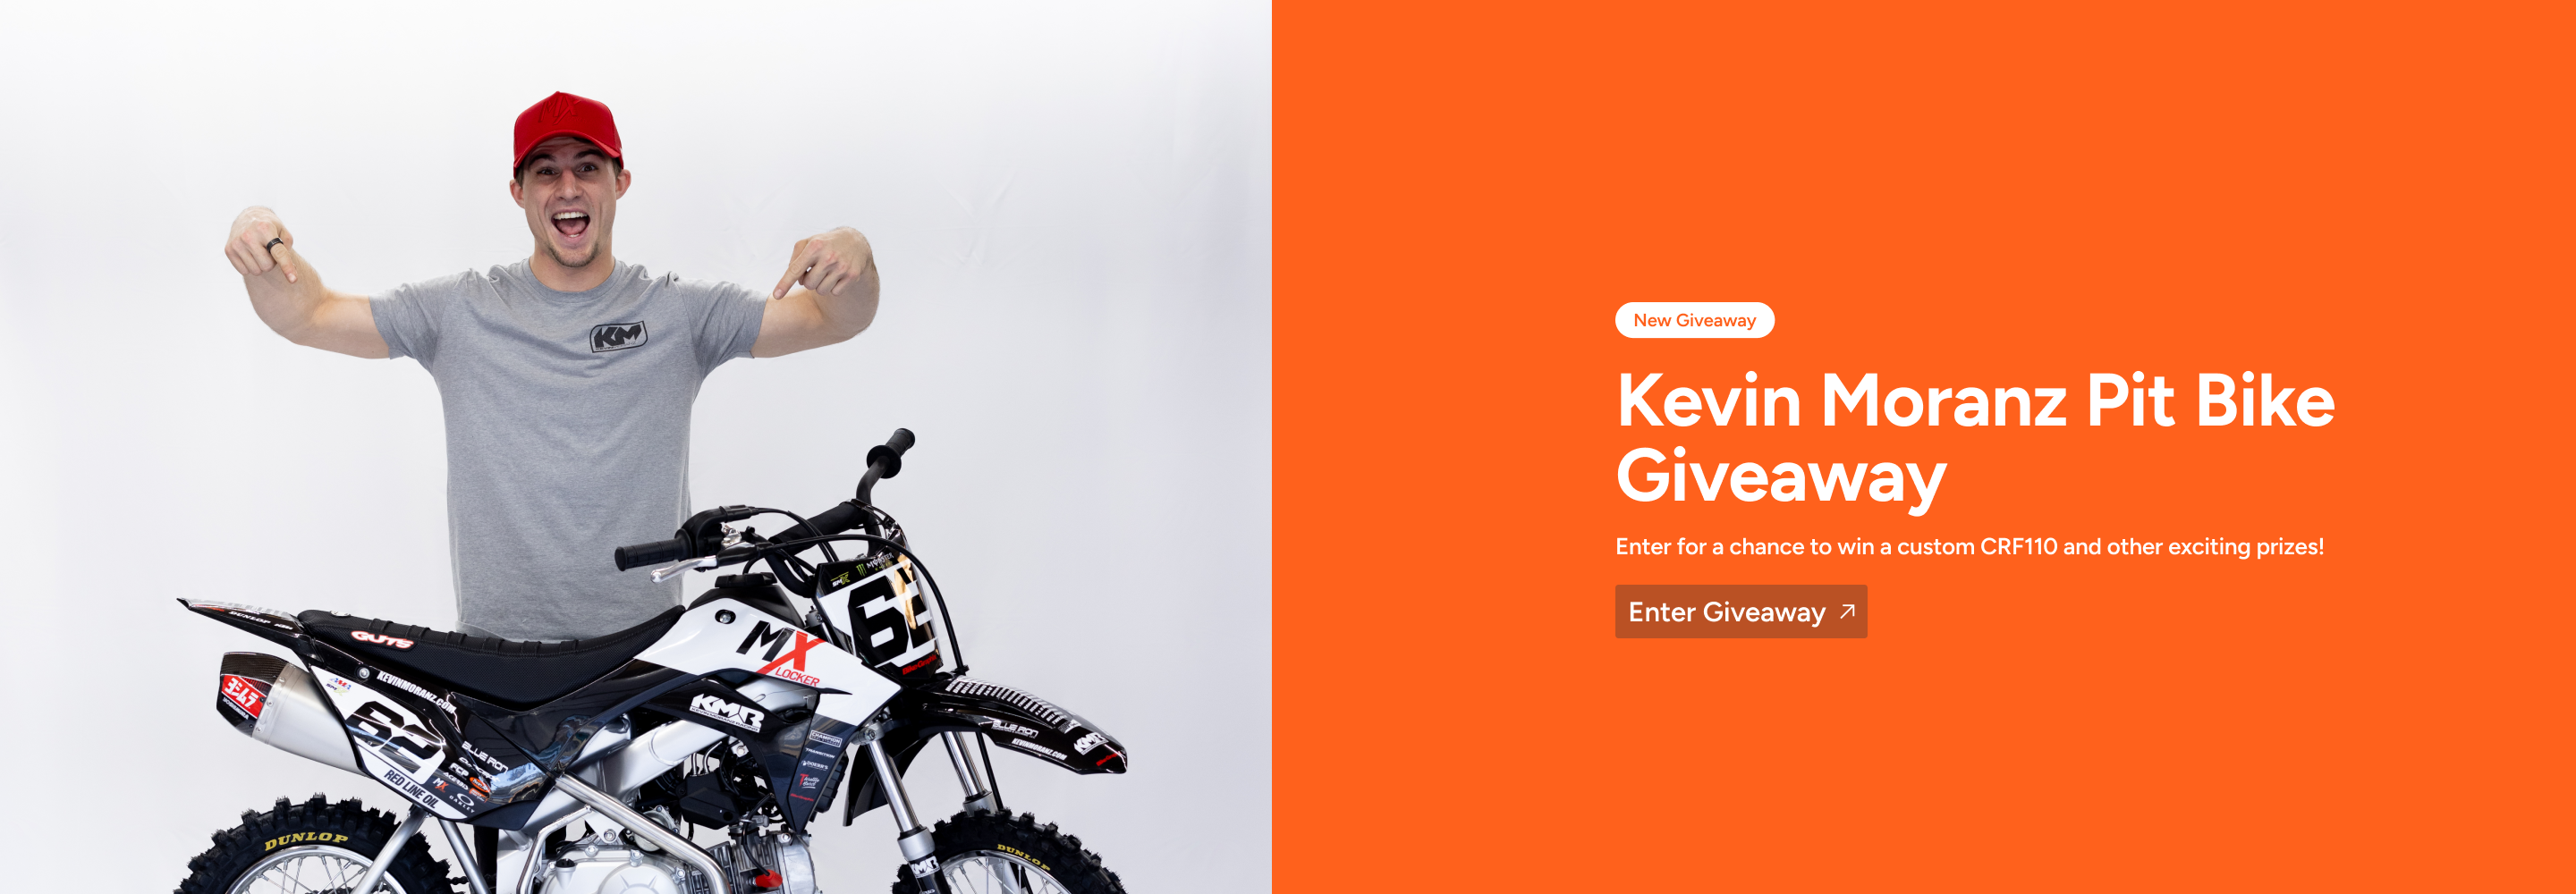 Kevin Moranz Pit Bike Giveaway